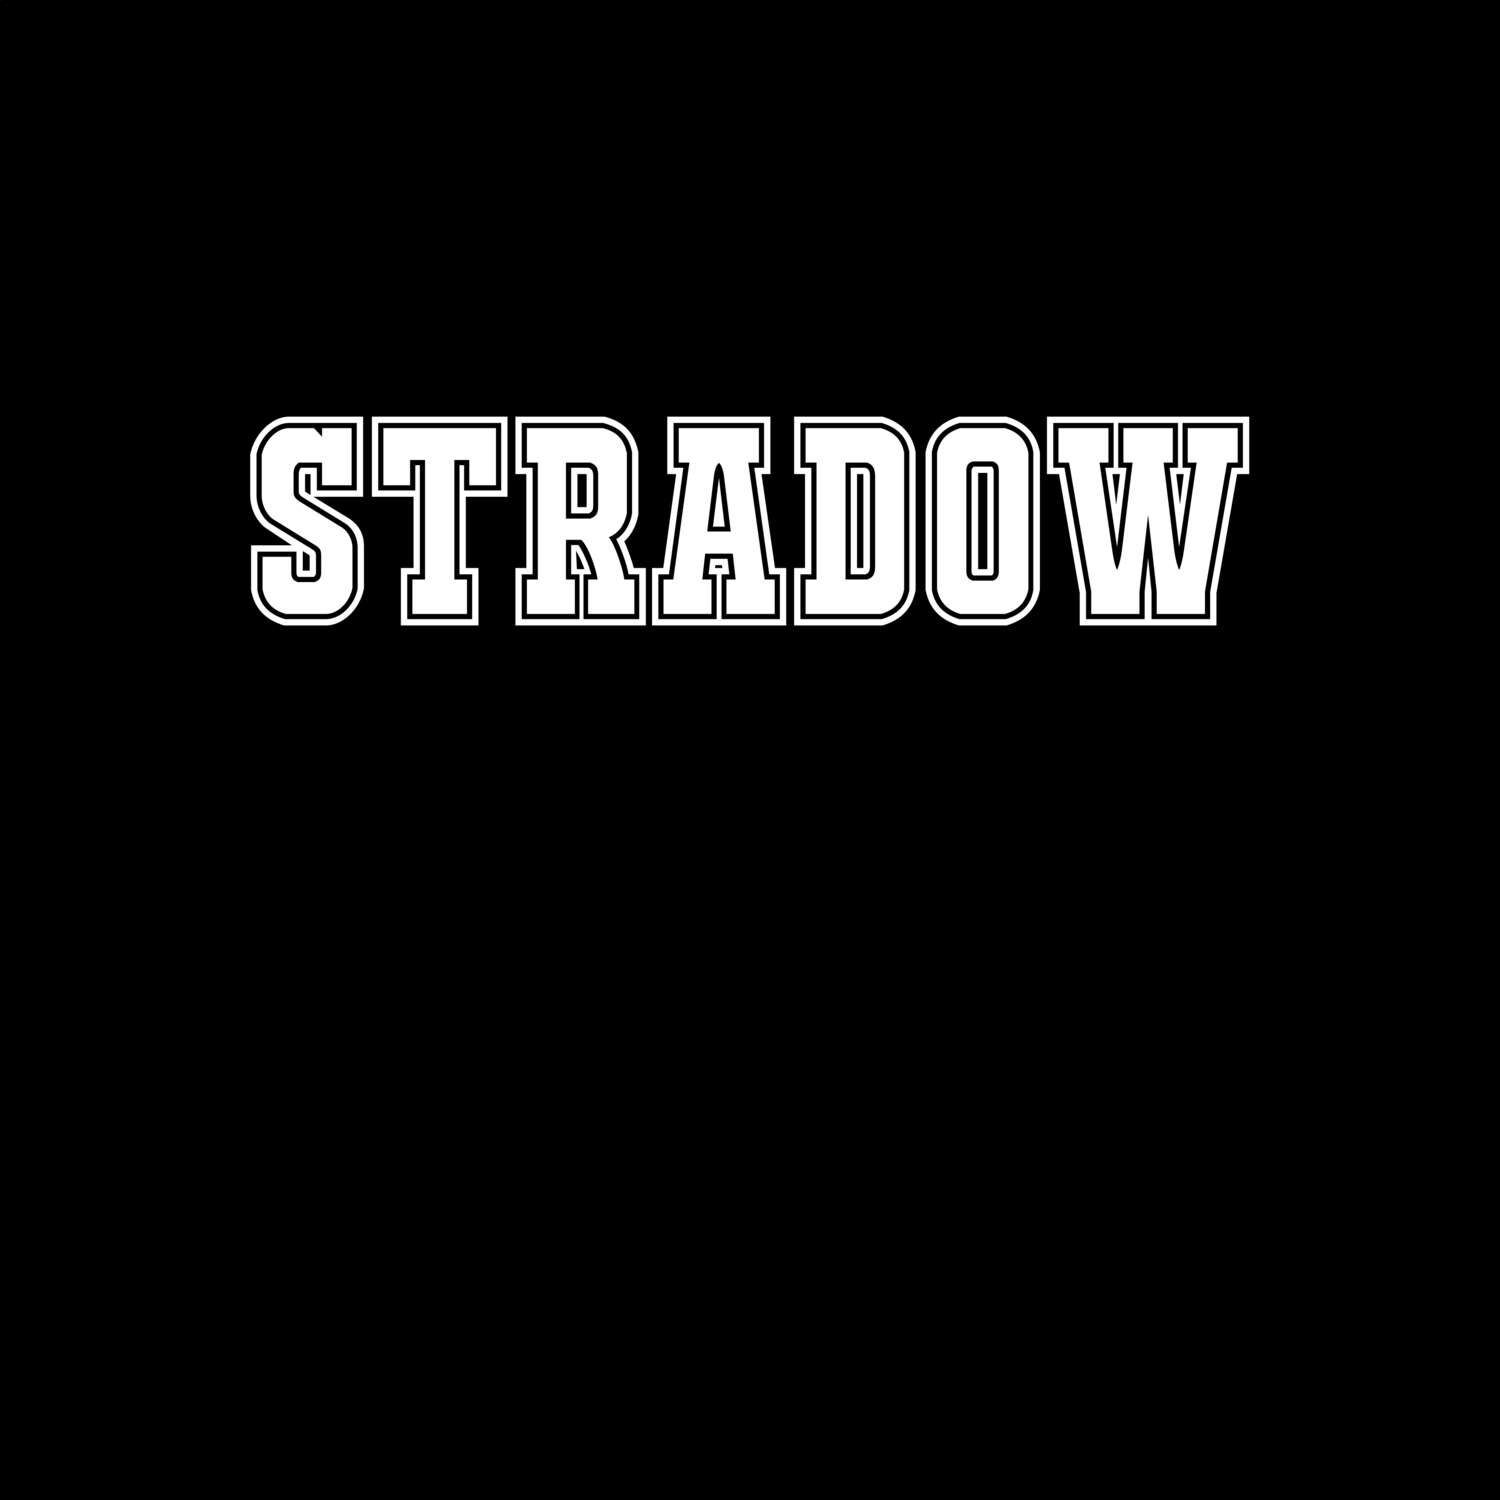 Stradow T-Shirt »Classic«